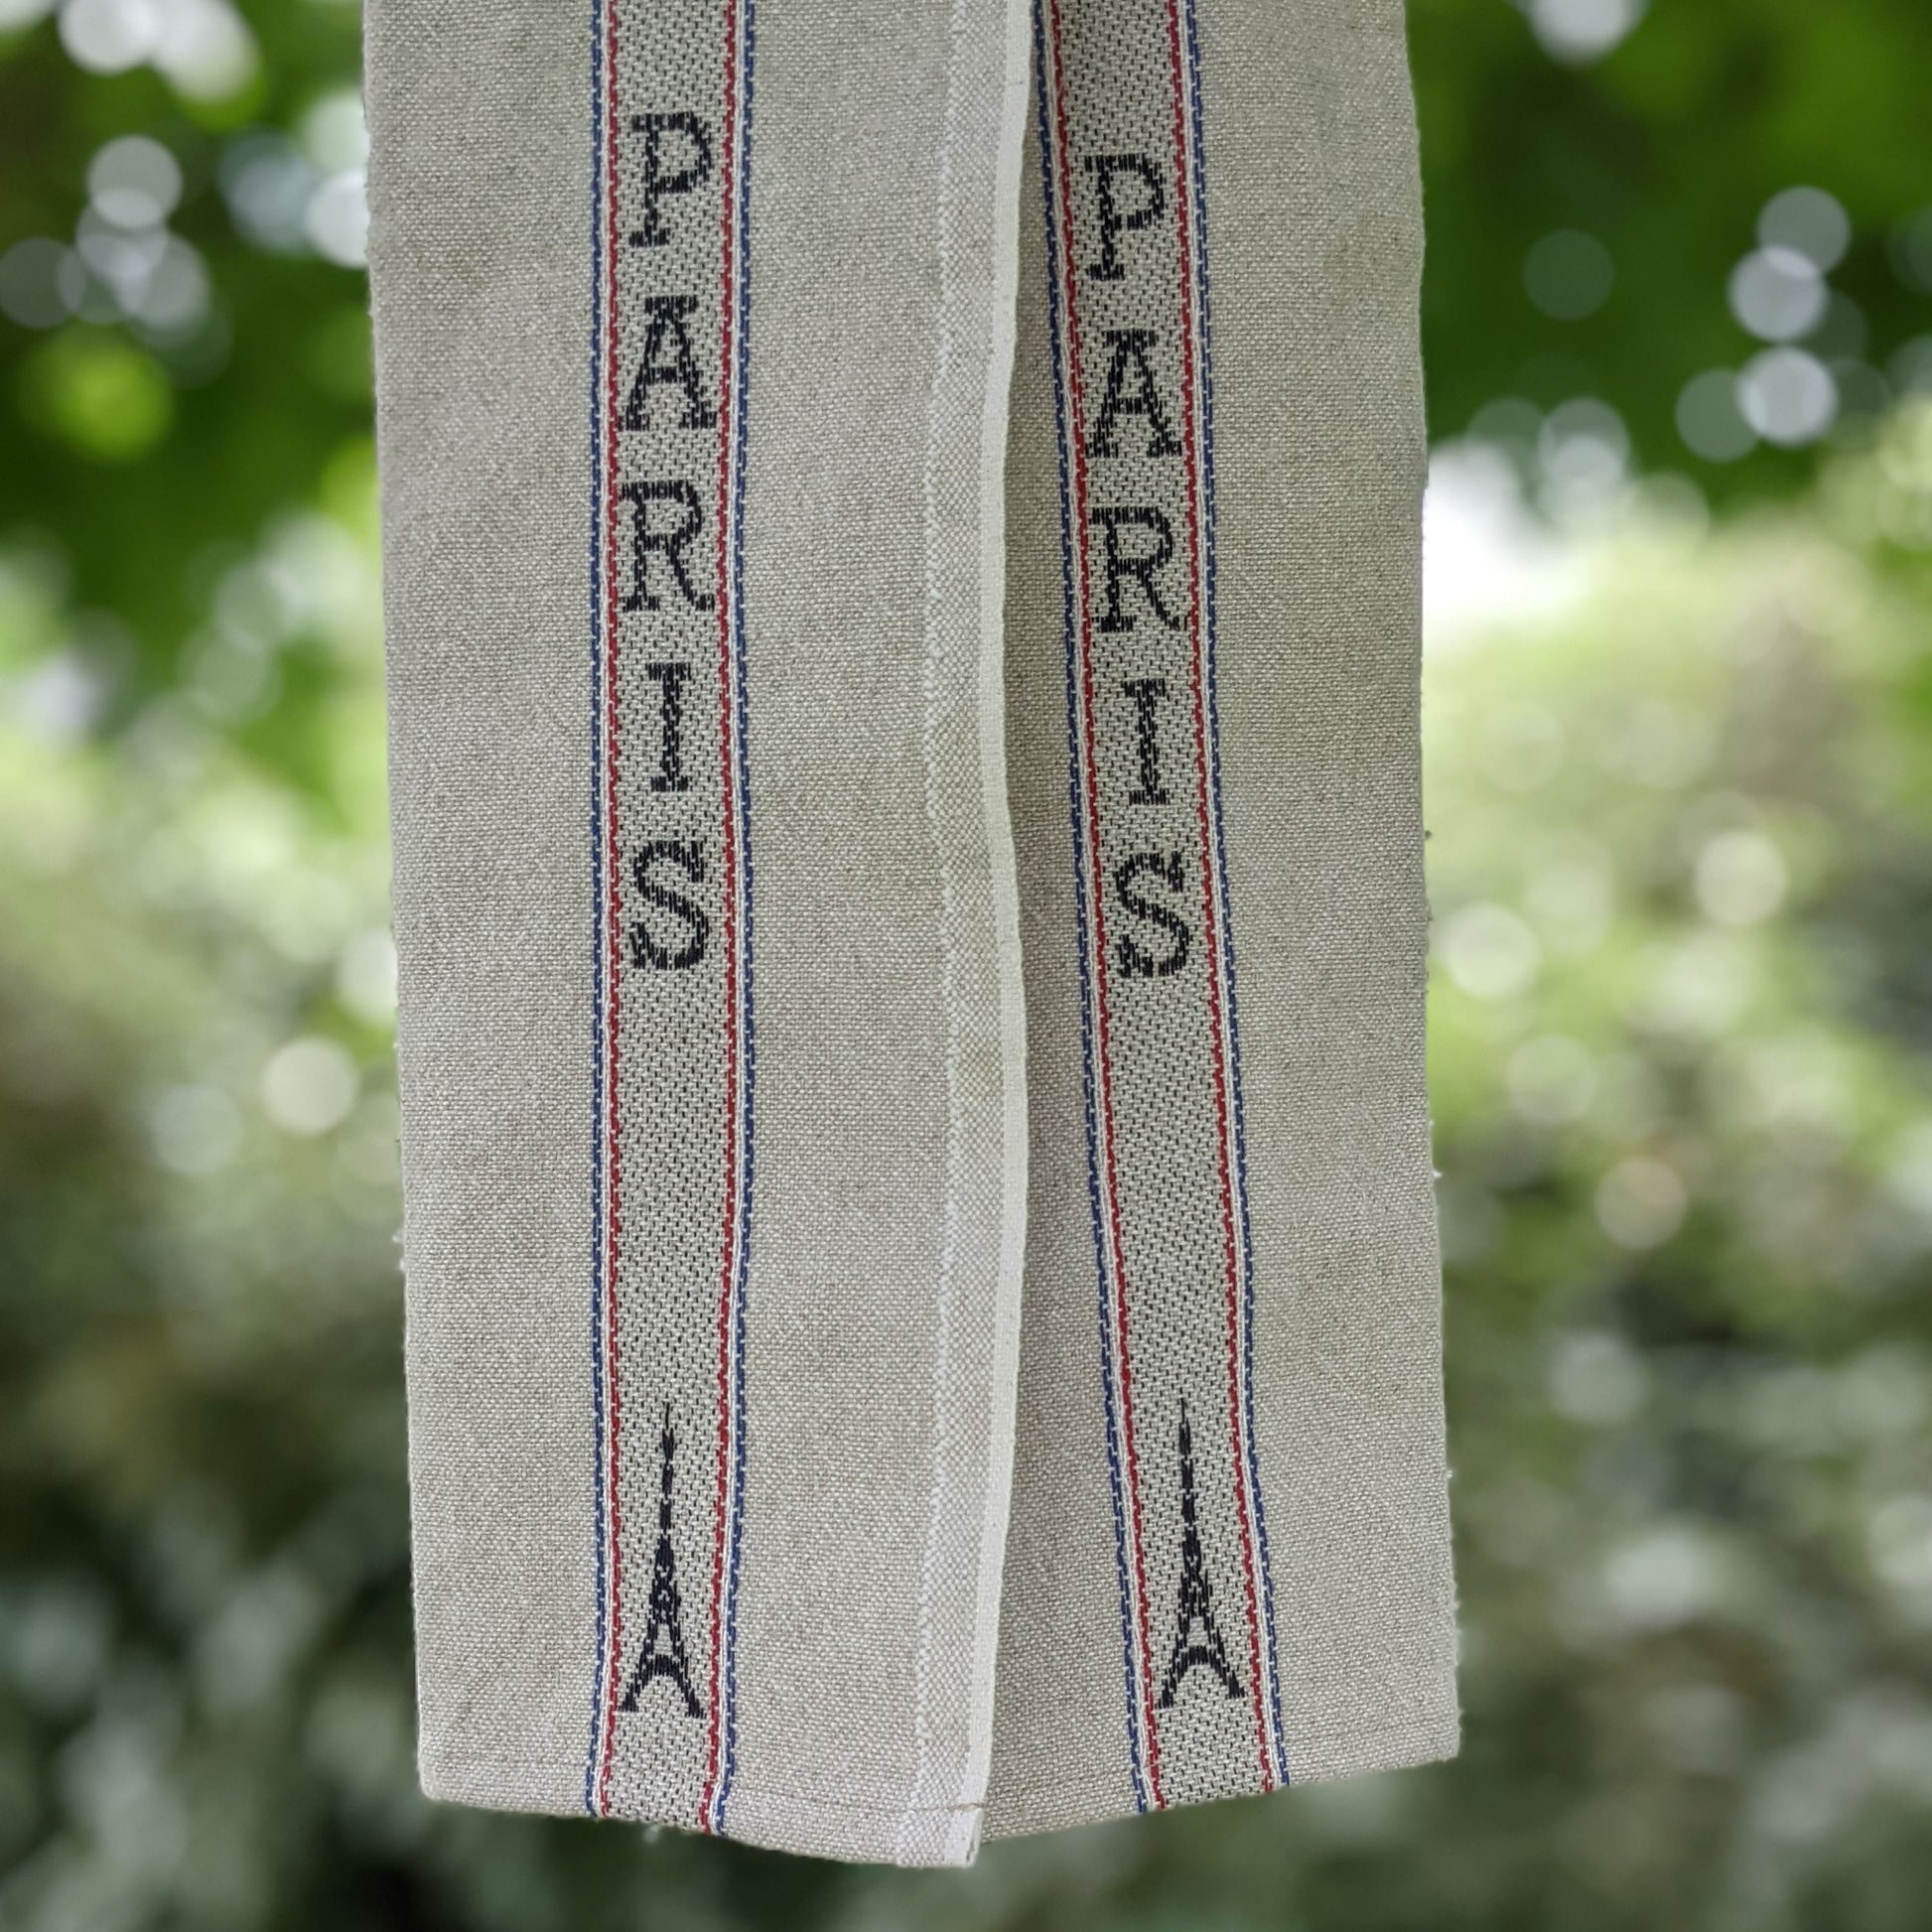 Paris tea towel - French Address